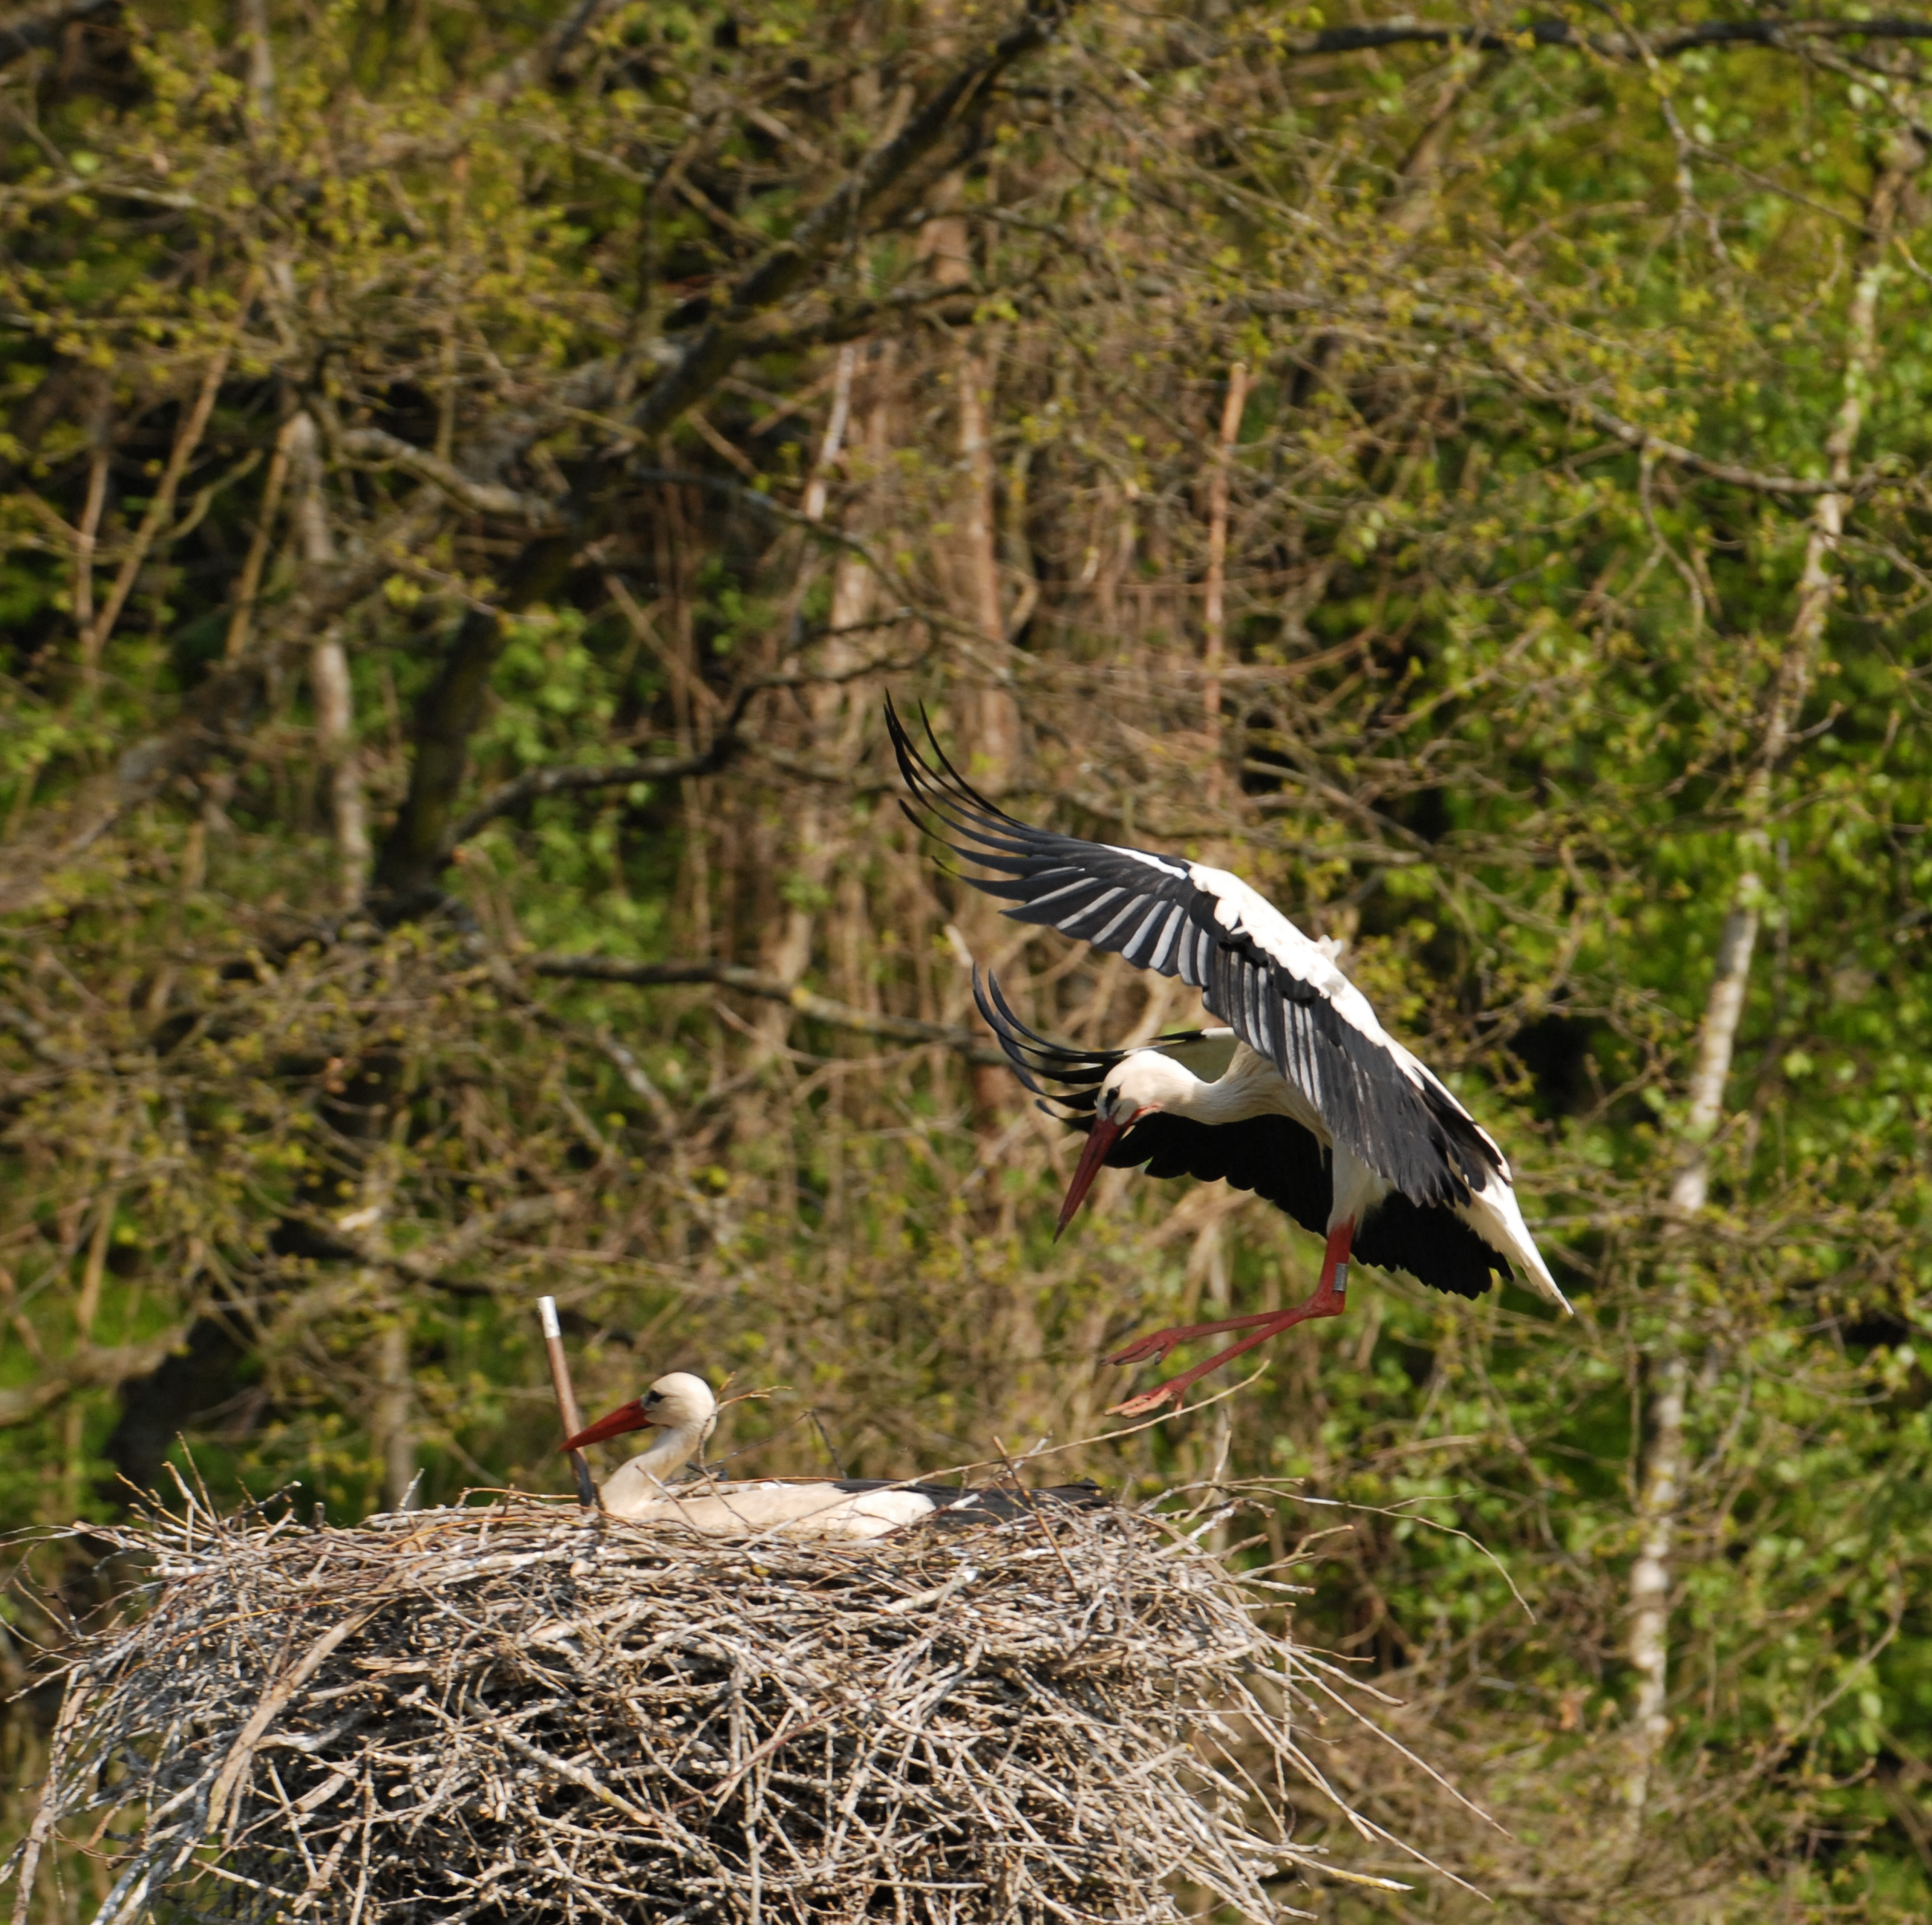 GIPE25 - Cigognes dans leur nid (by-sa)